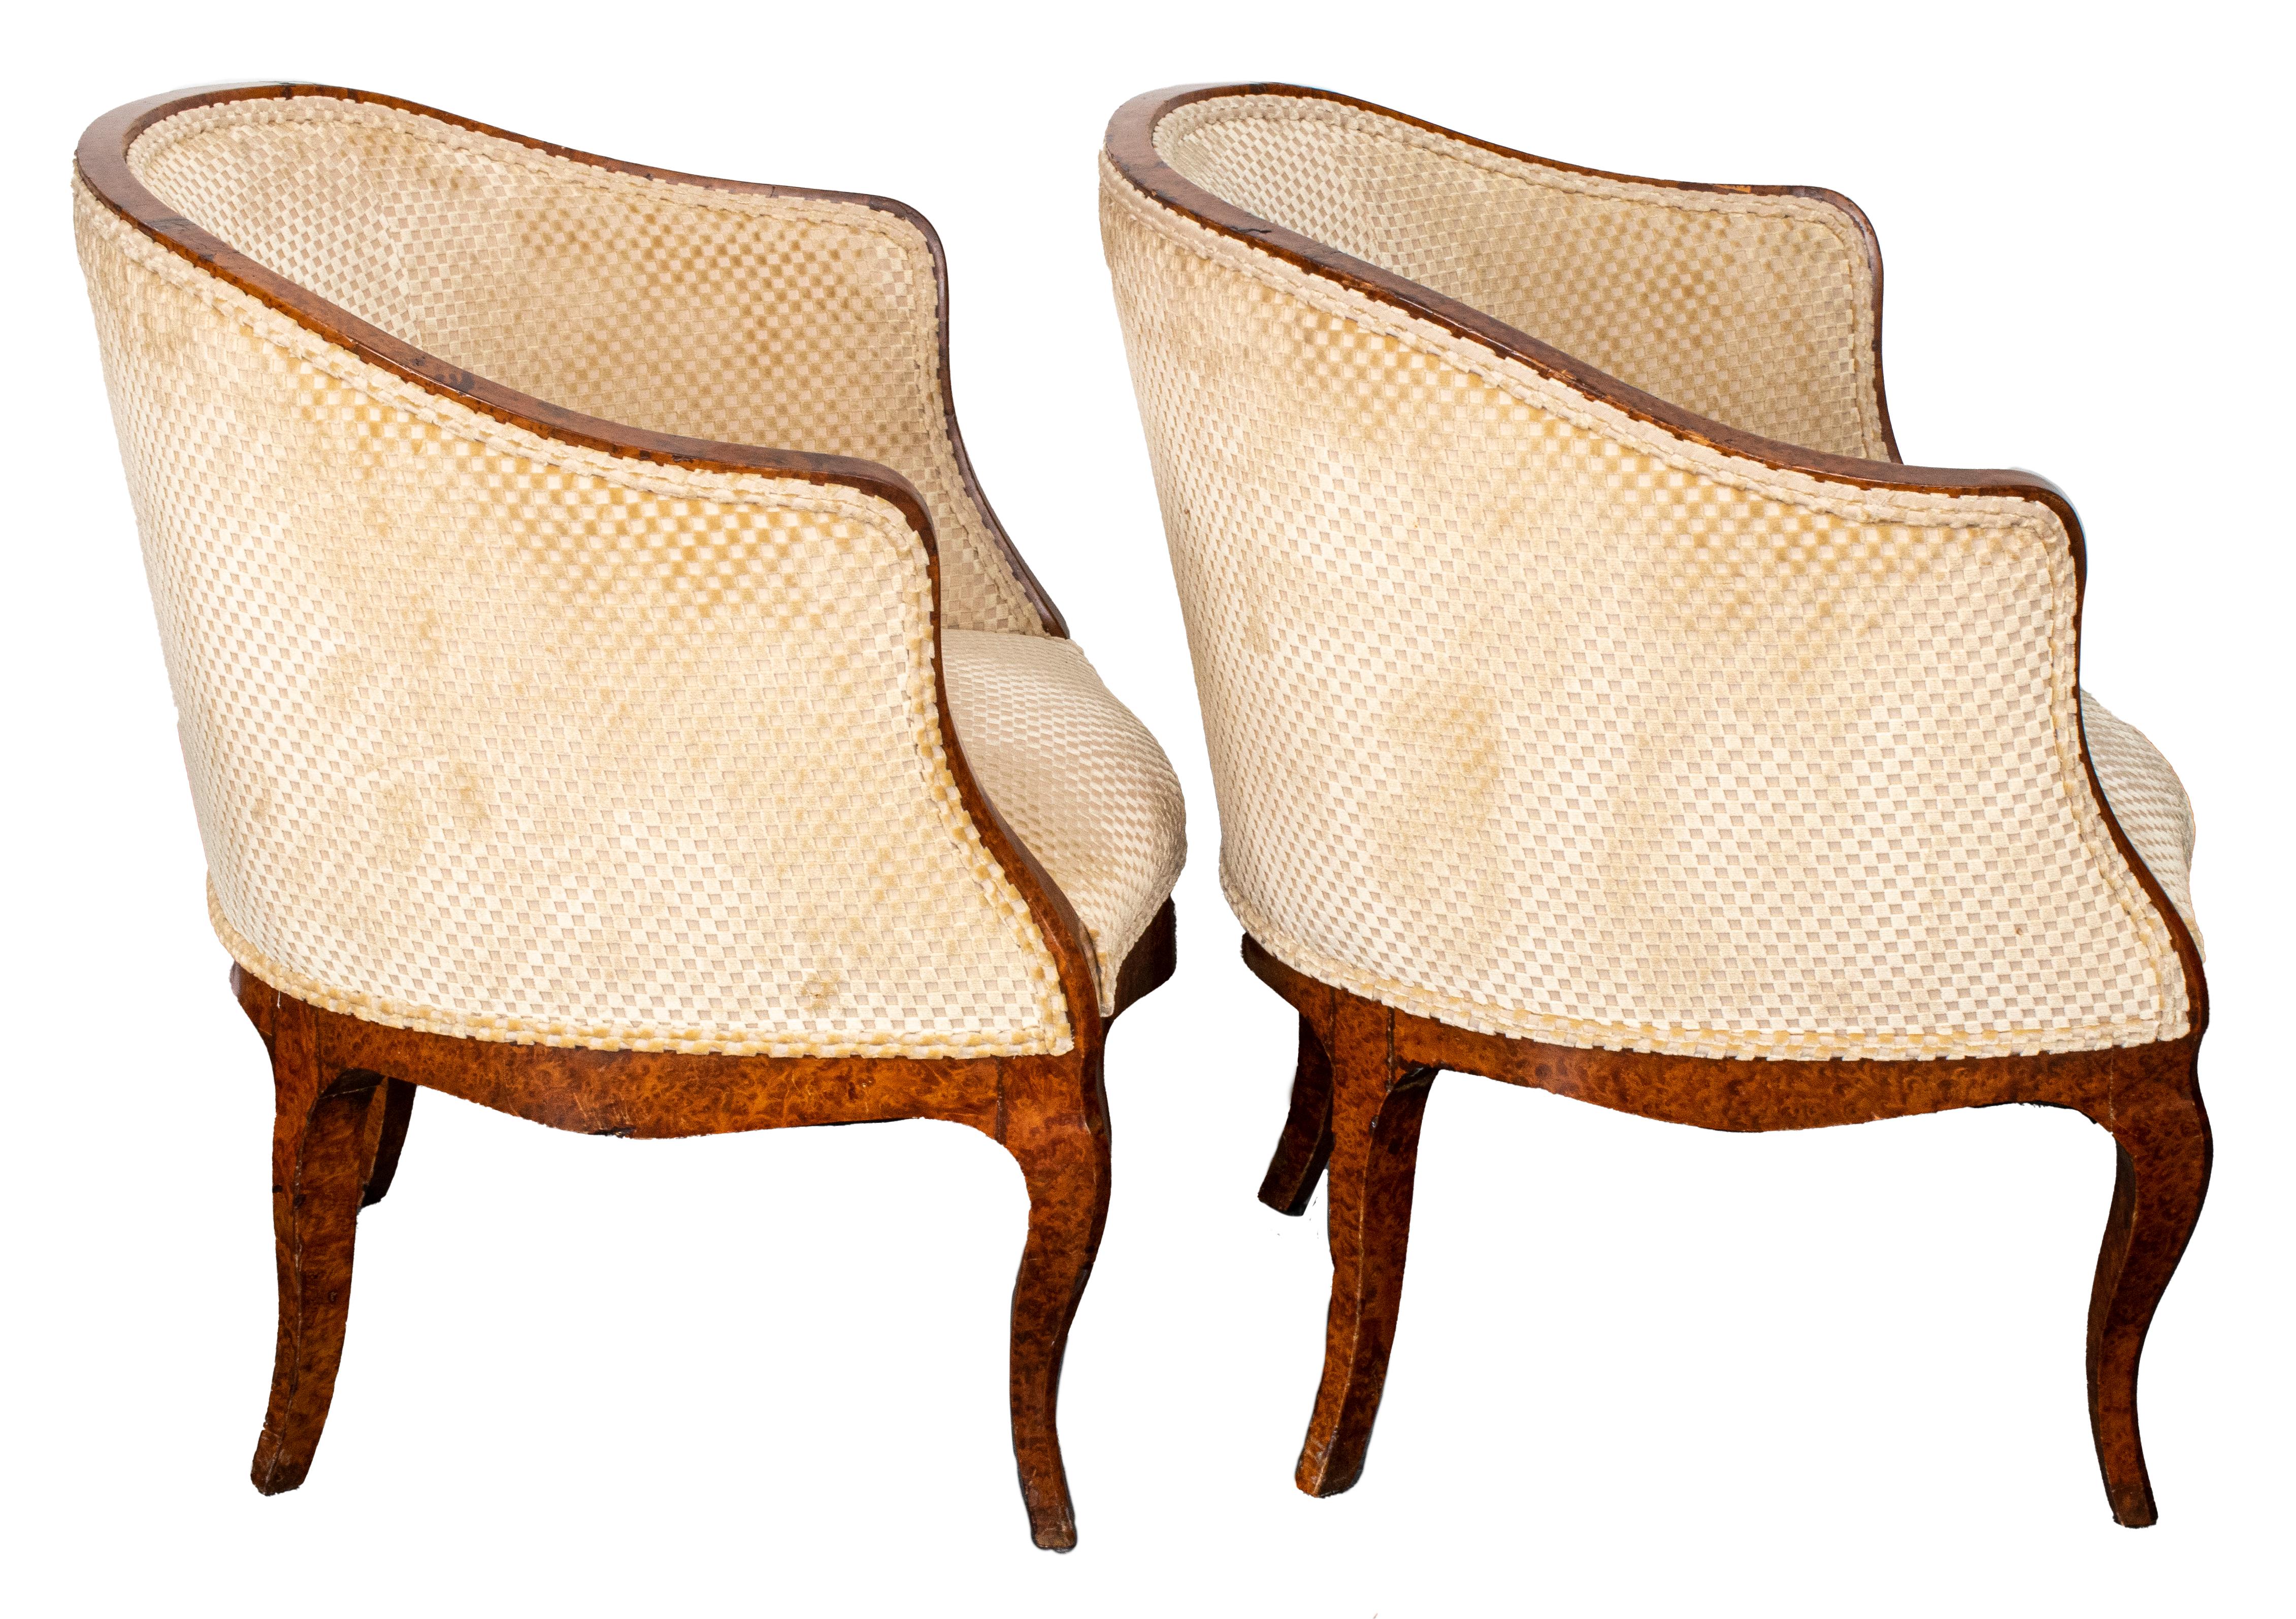 Pair of French Burl Wood Veneer Lounge Chairs 1